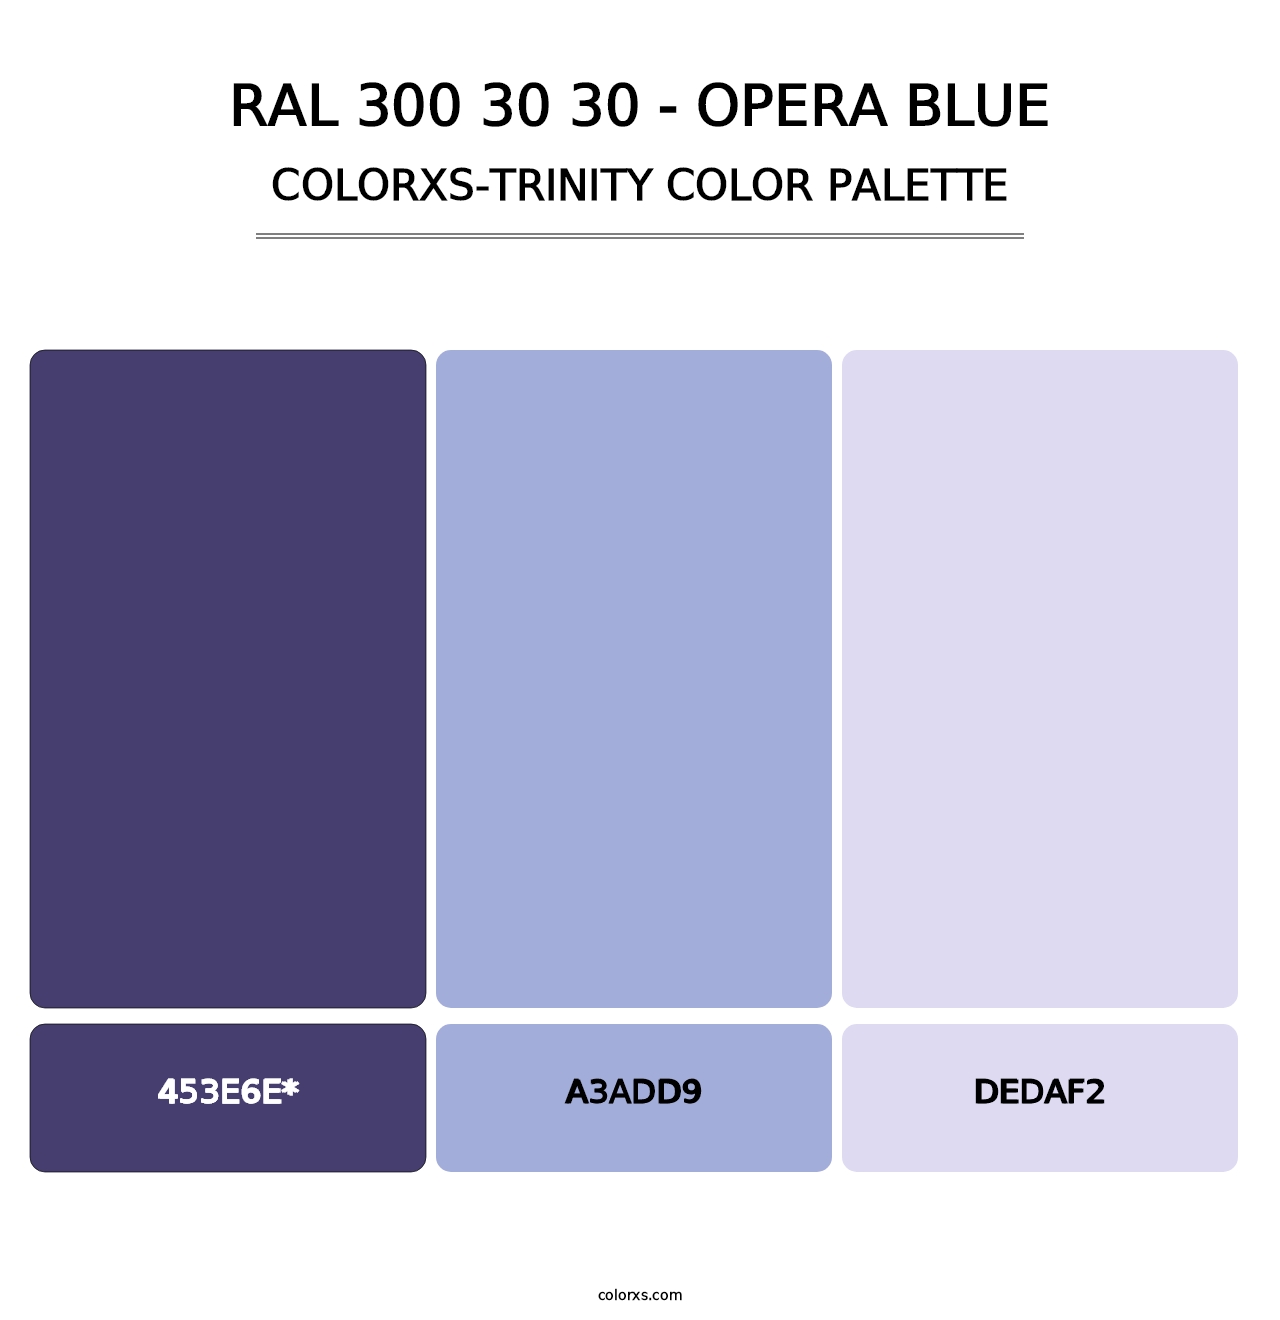 RAL 300 30 30 - Opera Blue - Colorxs Trinity Palette